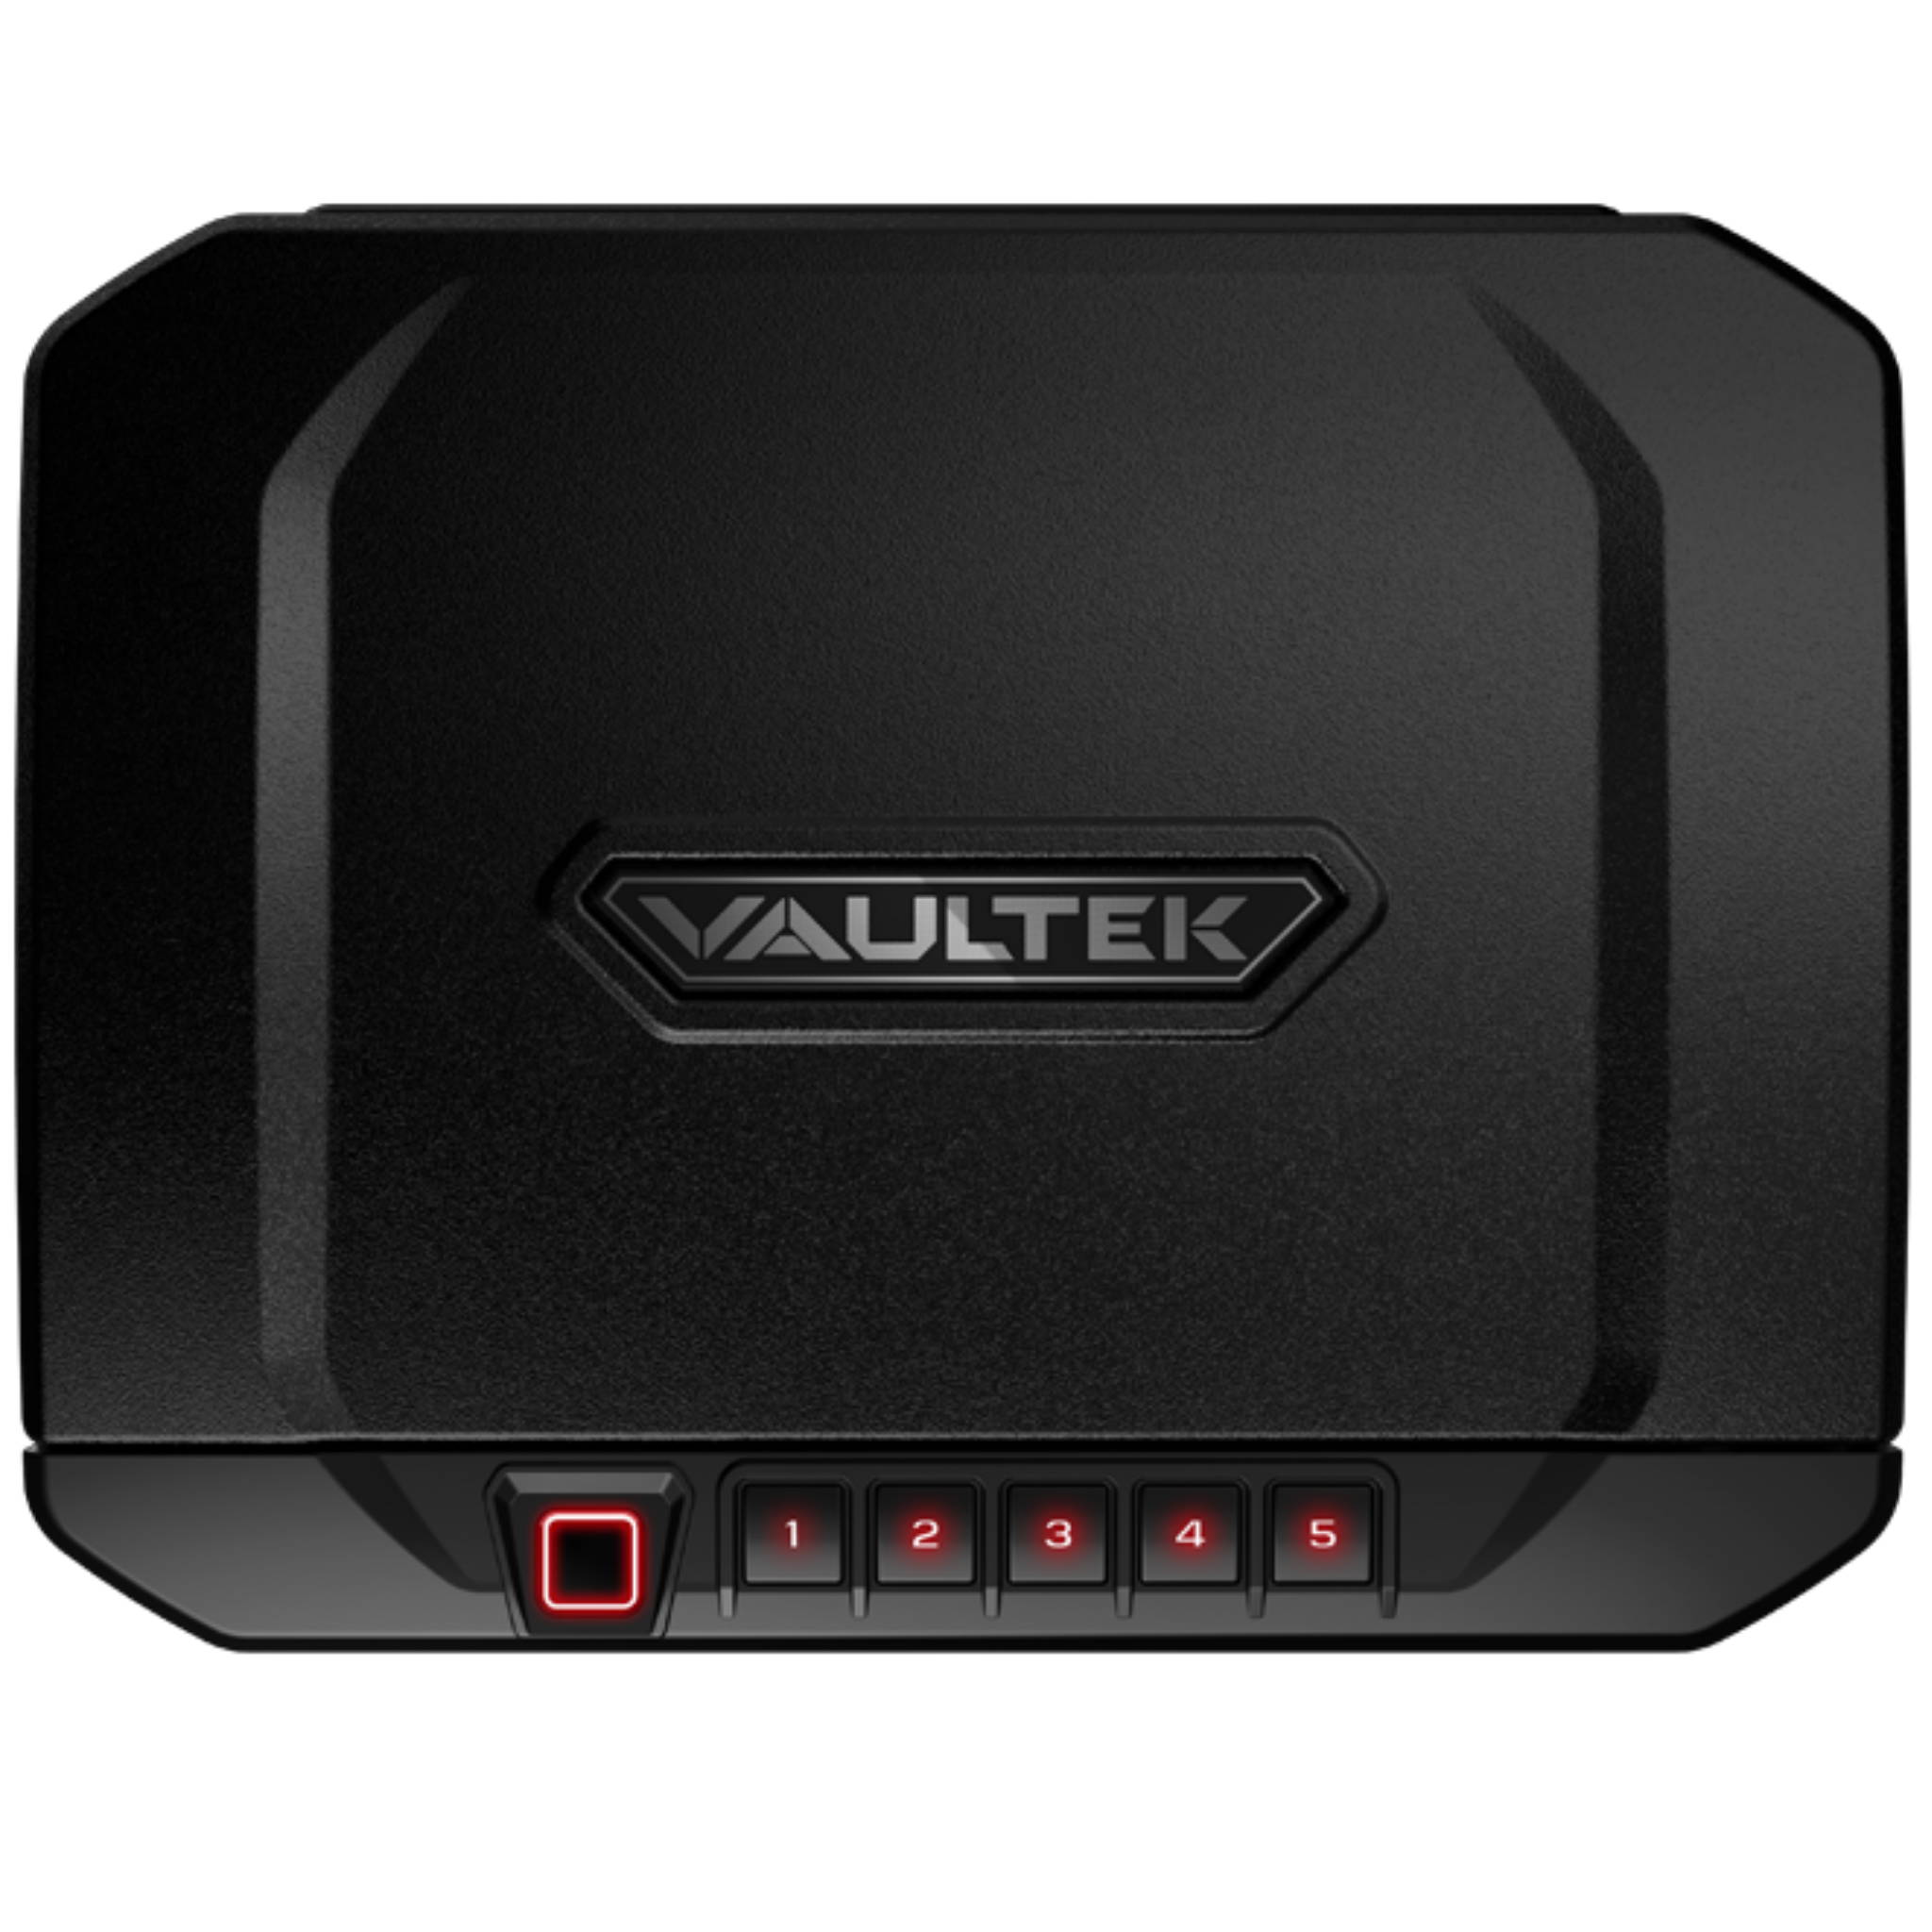 Vaultek VT20i - Bluetooth - Biometric